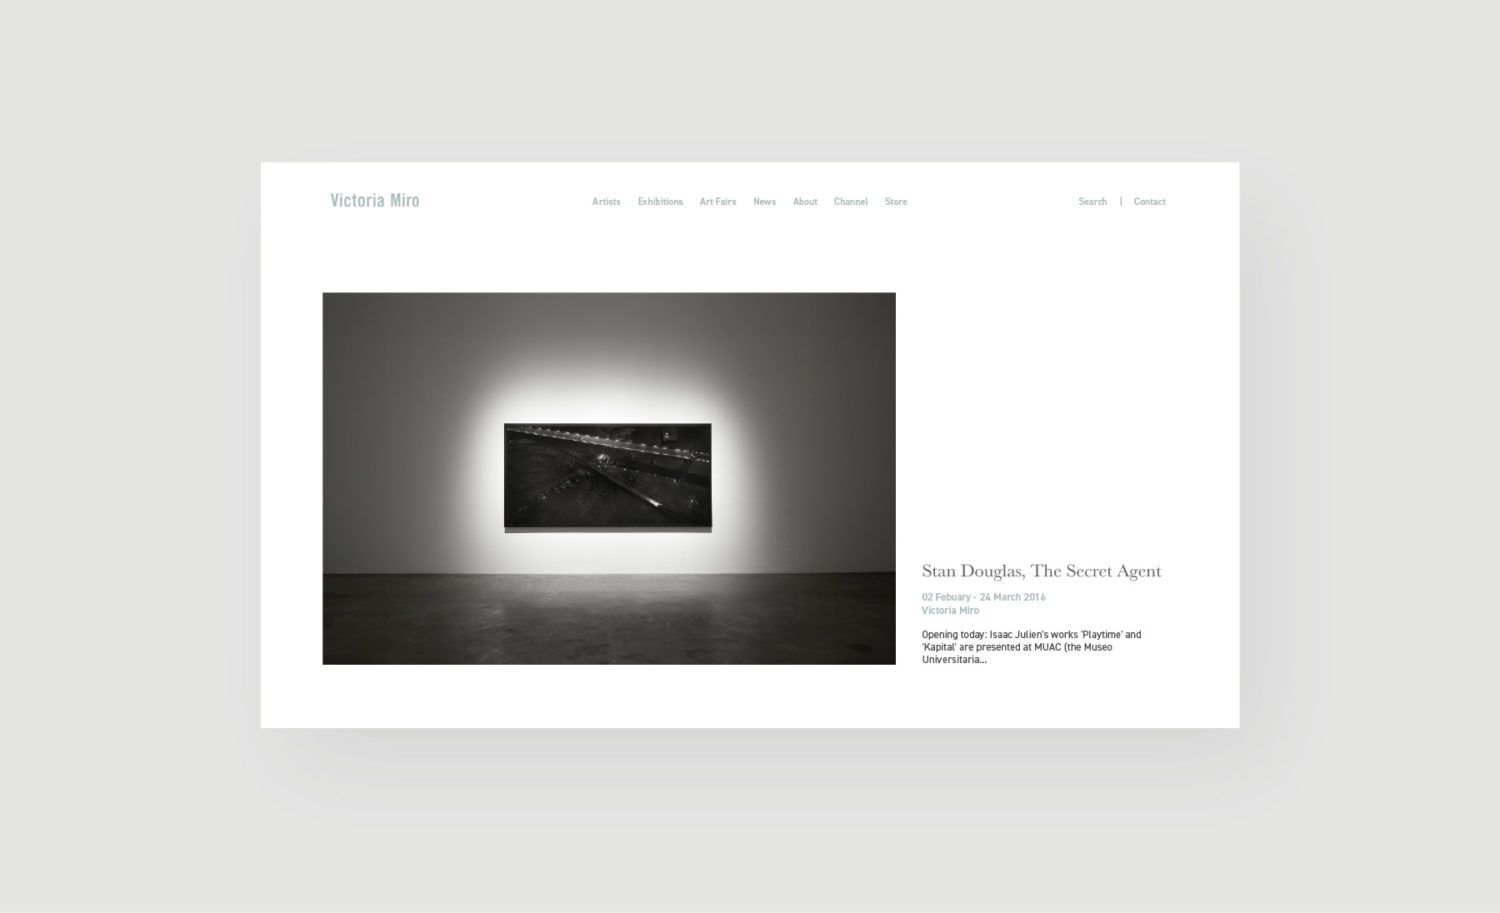 Victoria miro art gallery client - desktop web design - gallery section